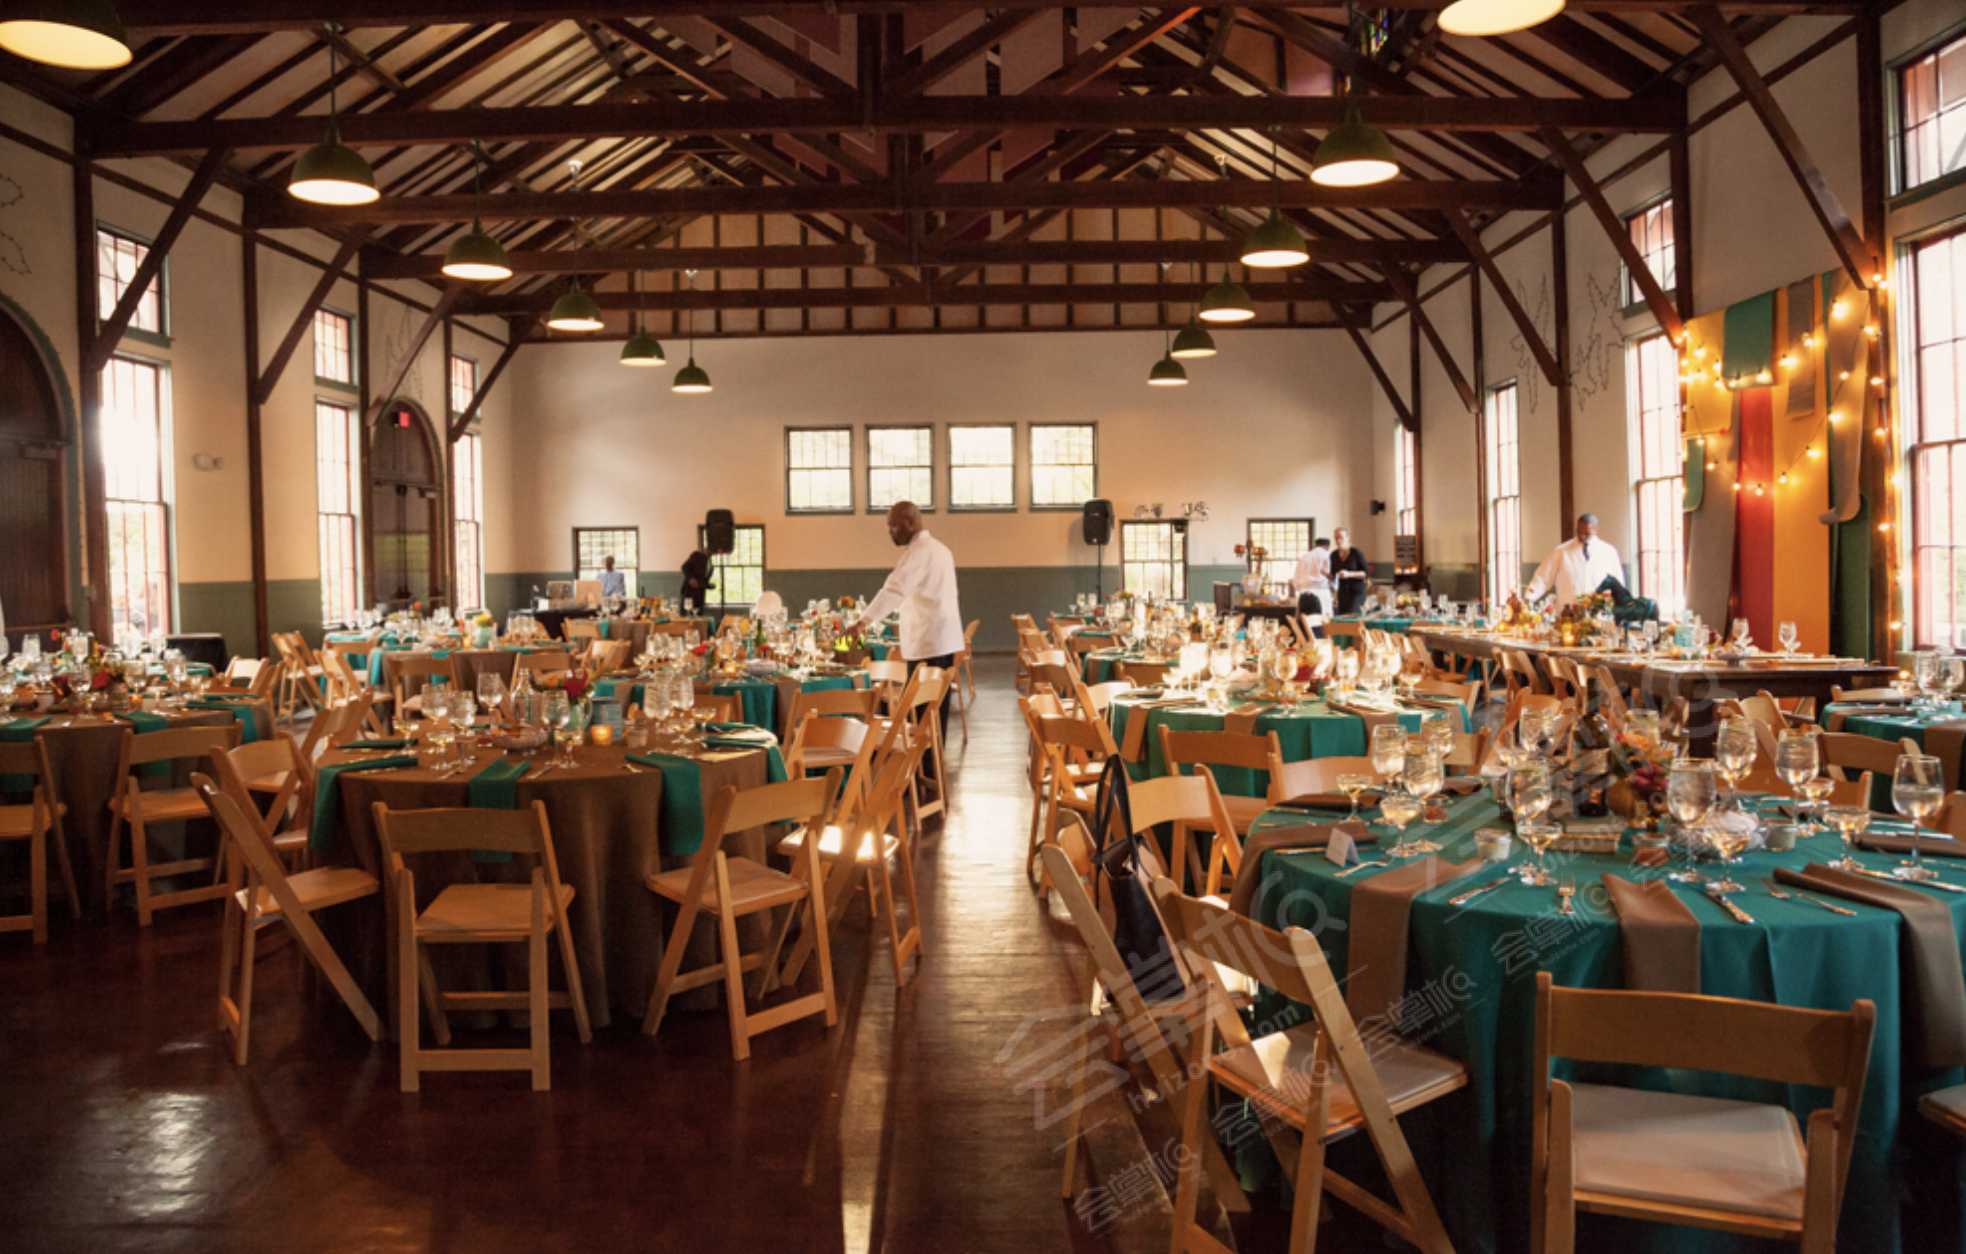 Historic Indoor & Outdoor Event Venue Perfect for Birthdays / Weddings / Anniversaries / Engagements